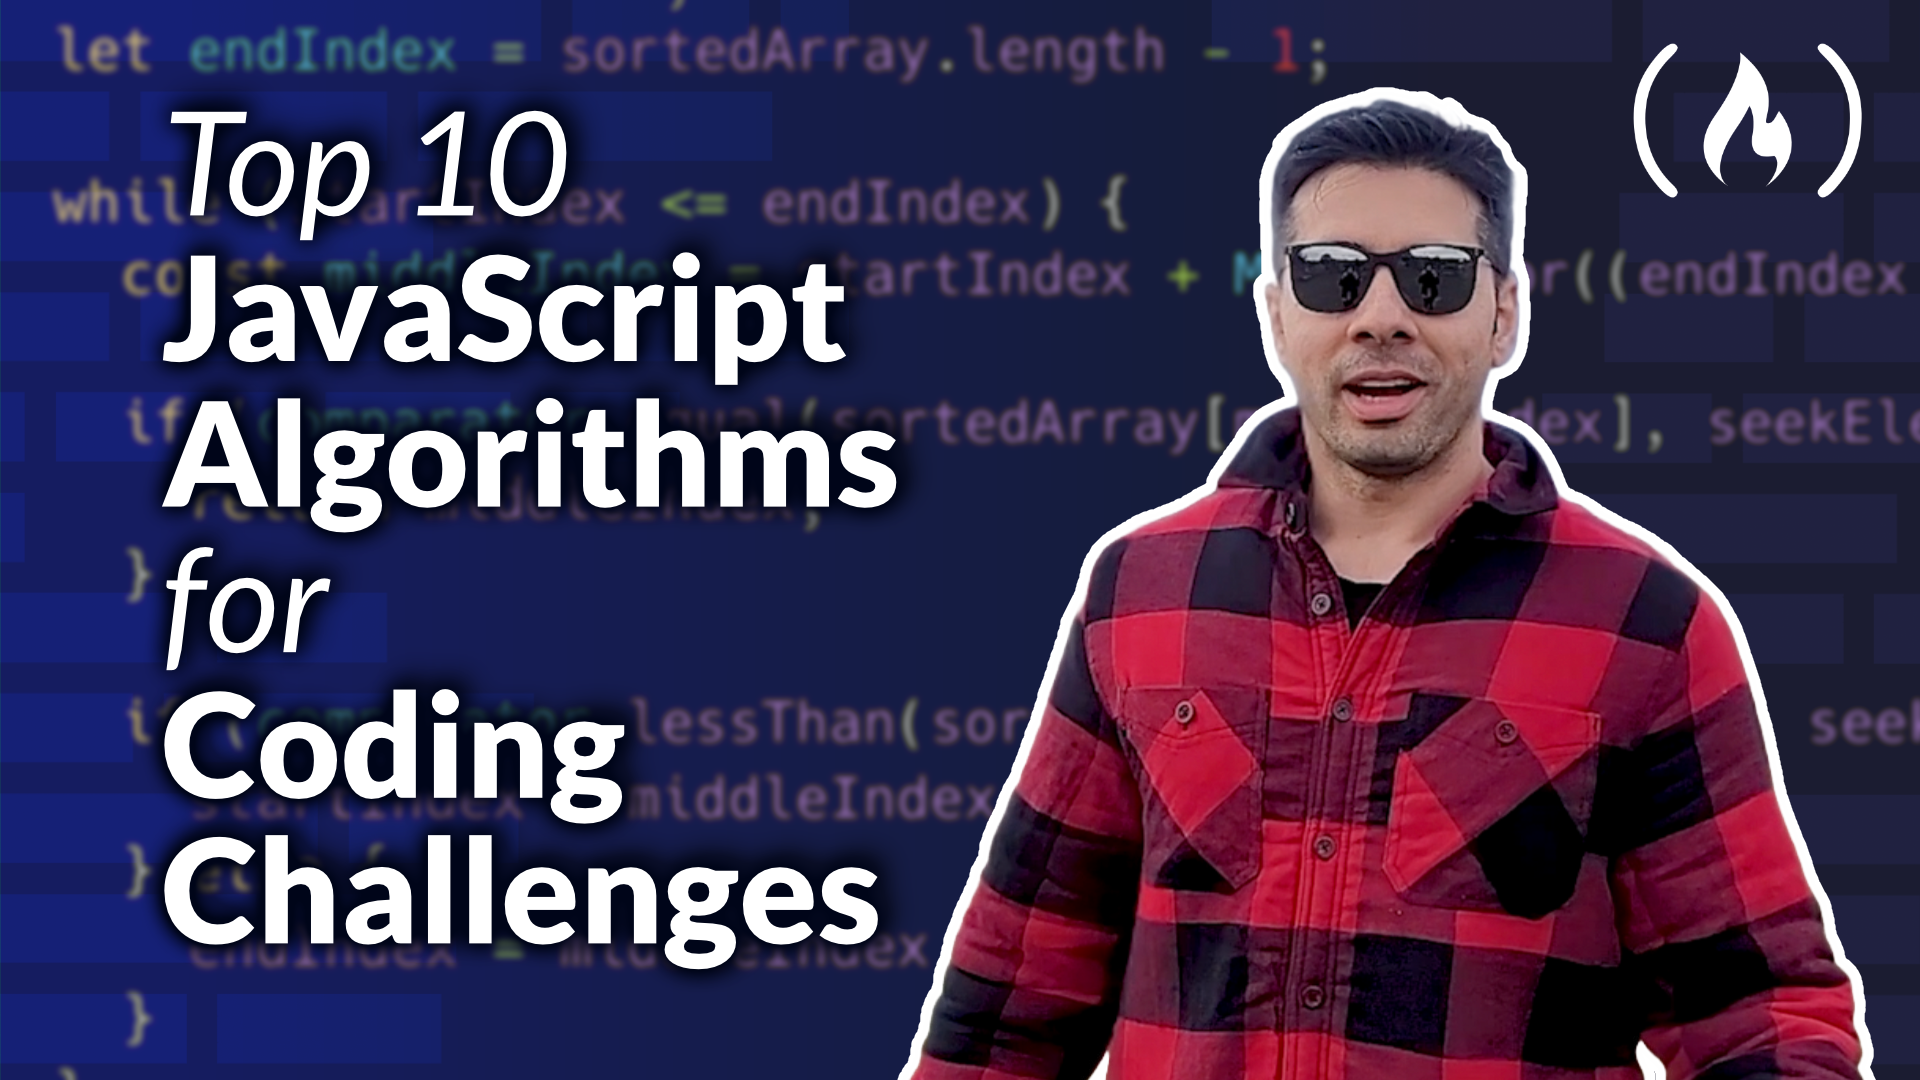 Top 10 JavaScript Algorithms for Coding Challenges